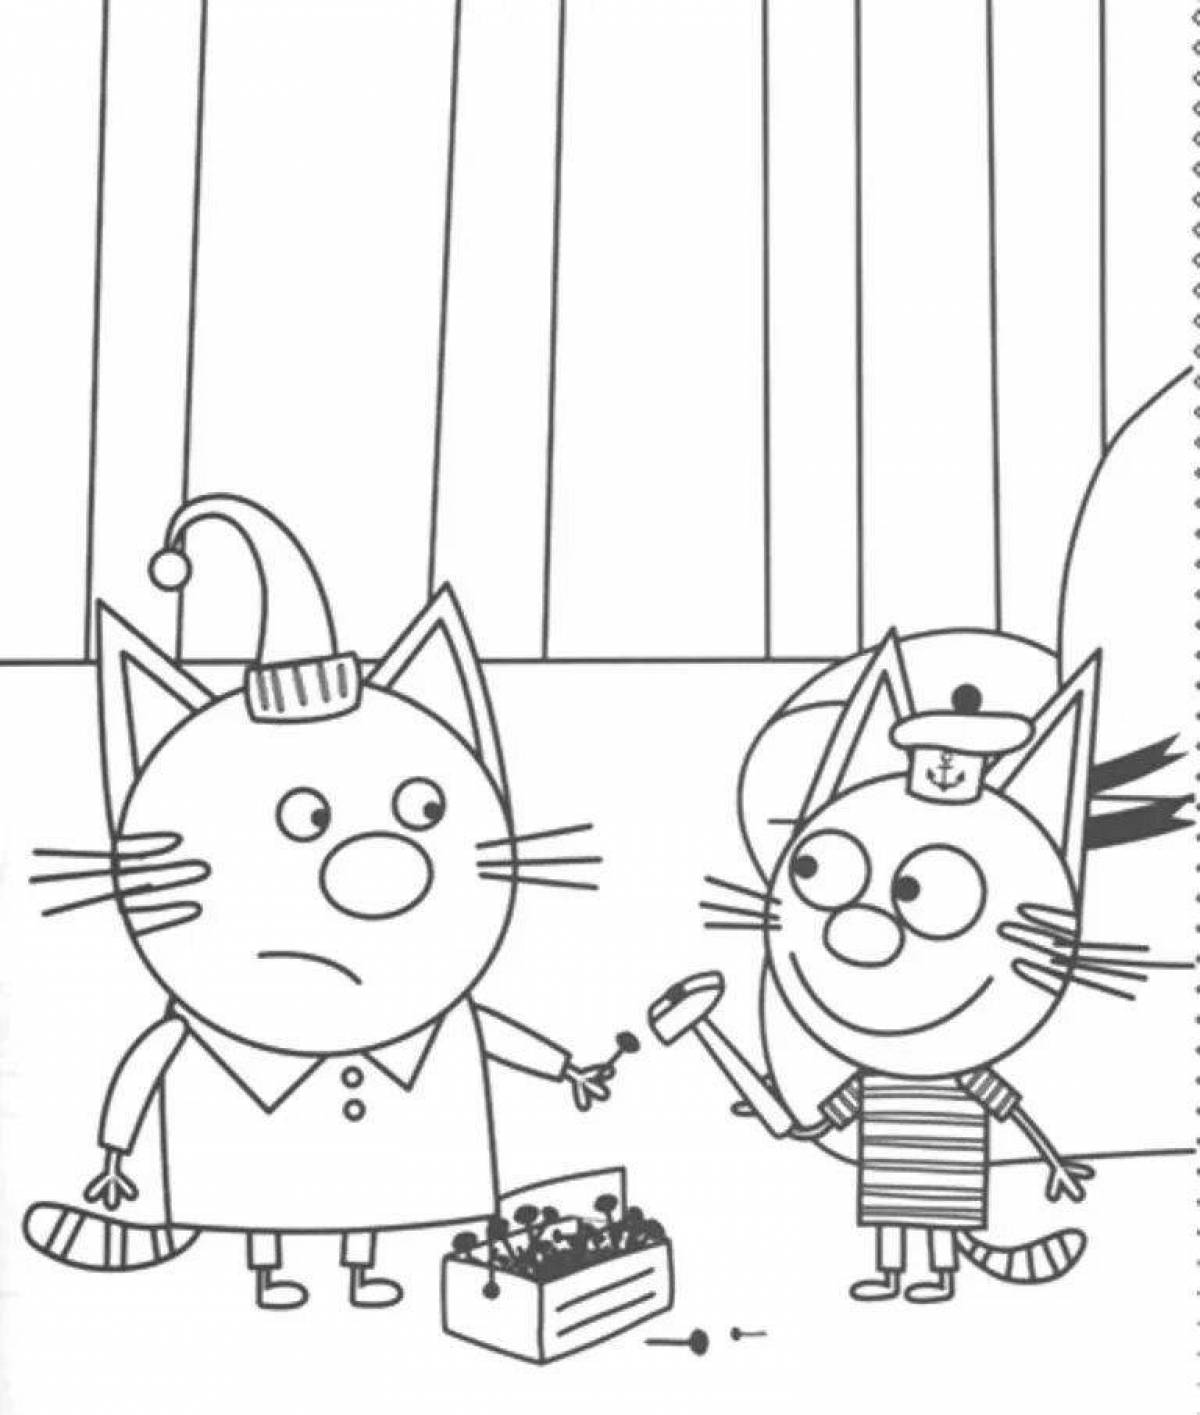 Three cats coloring book #1